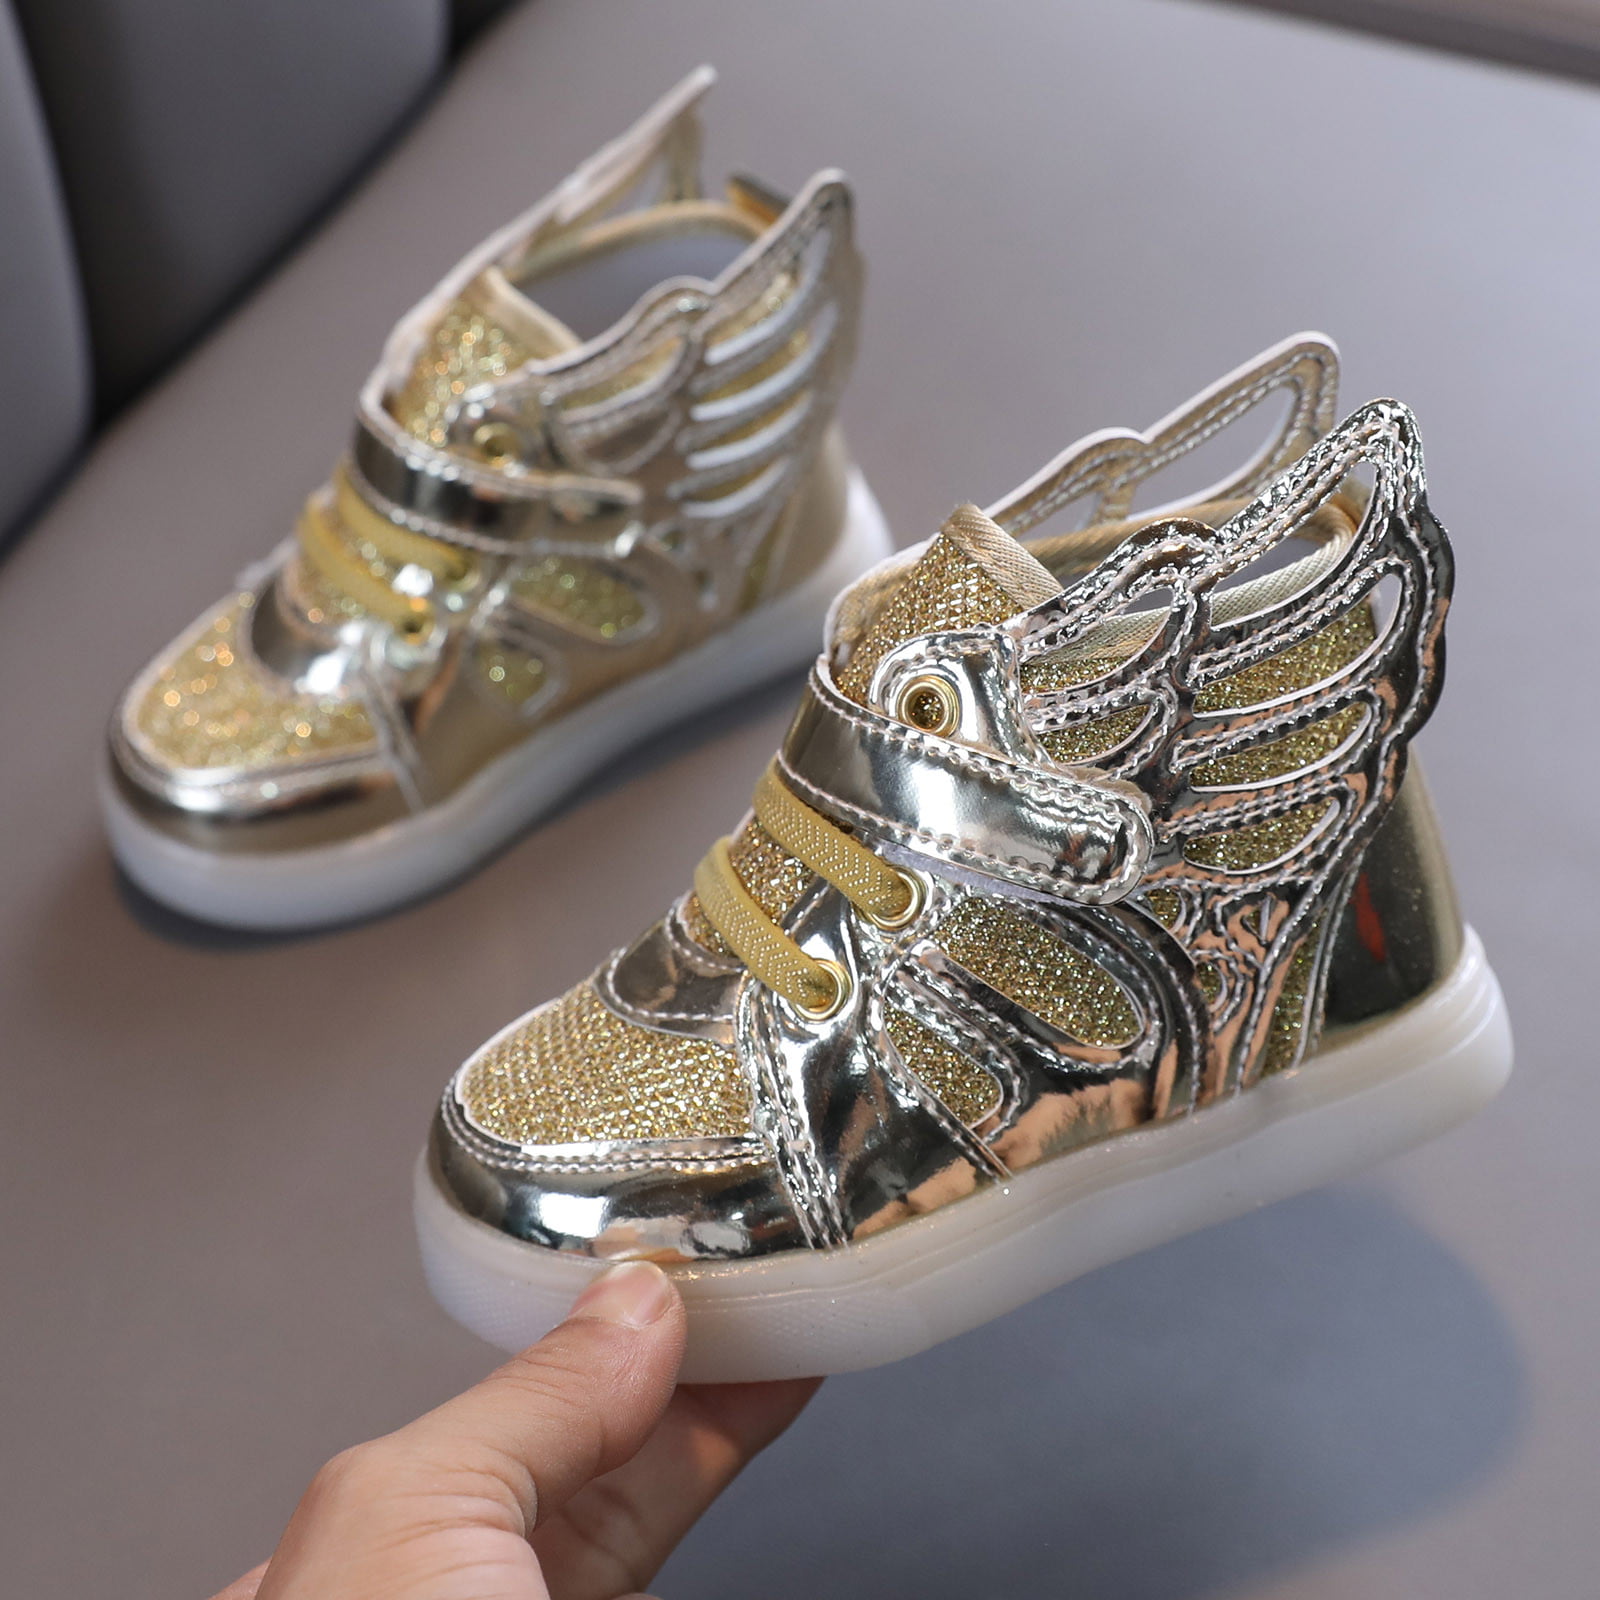 Baby June Velcro Sneakers - Silver 27